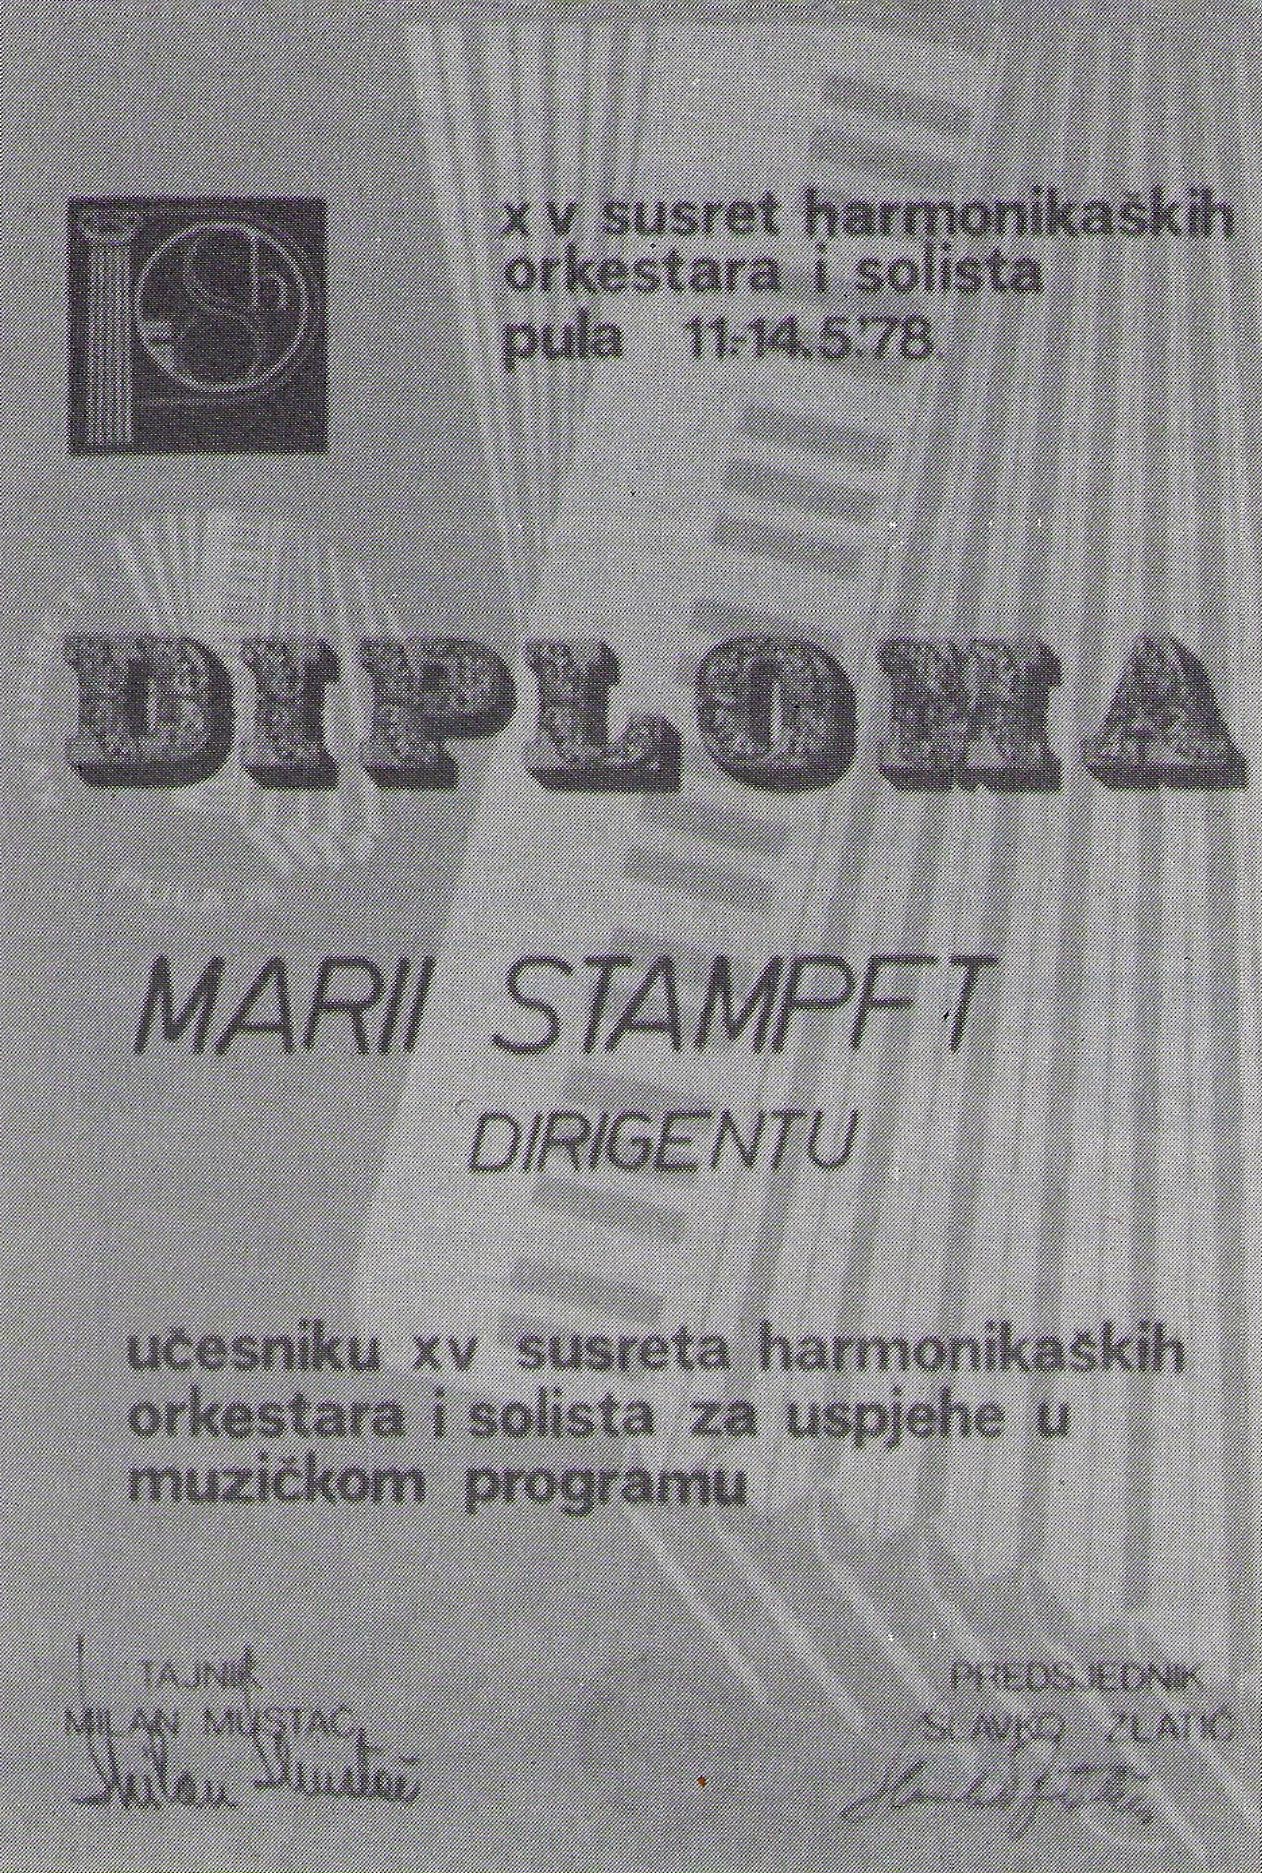 1978 Pula Urkunde verbesssert